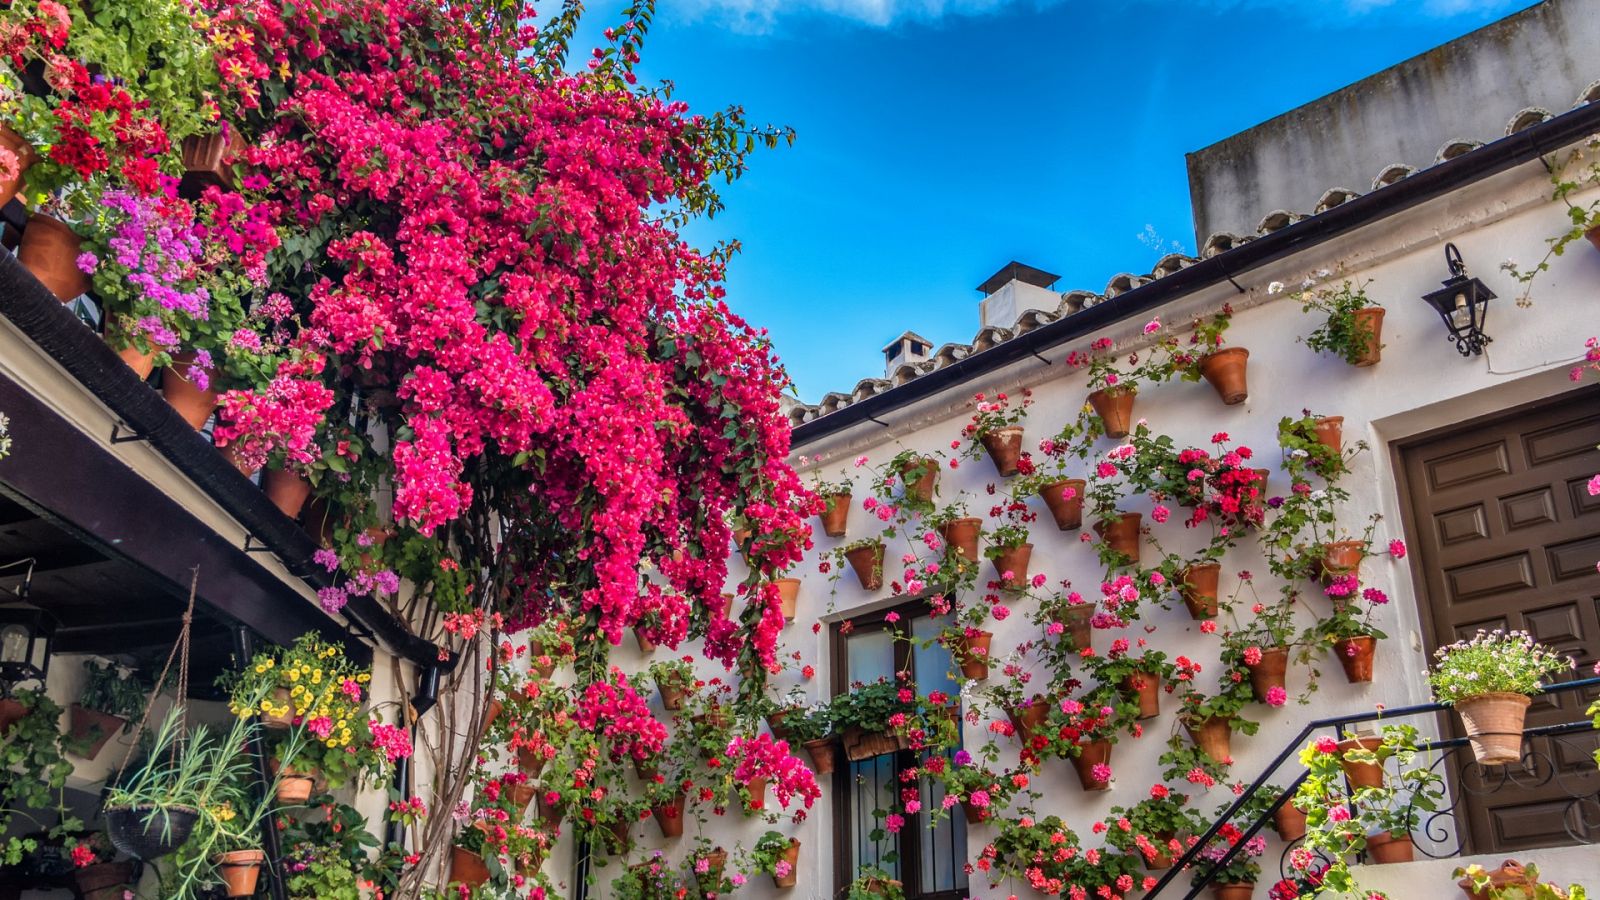 La primavera llega a los patios de Córdoba